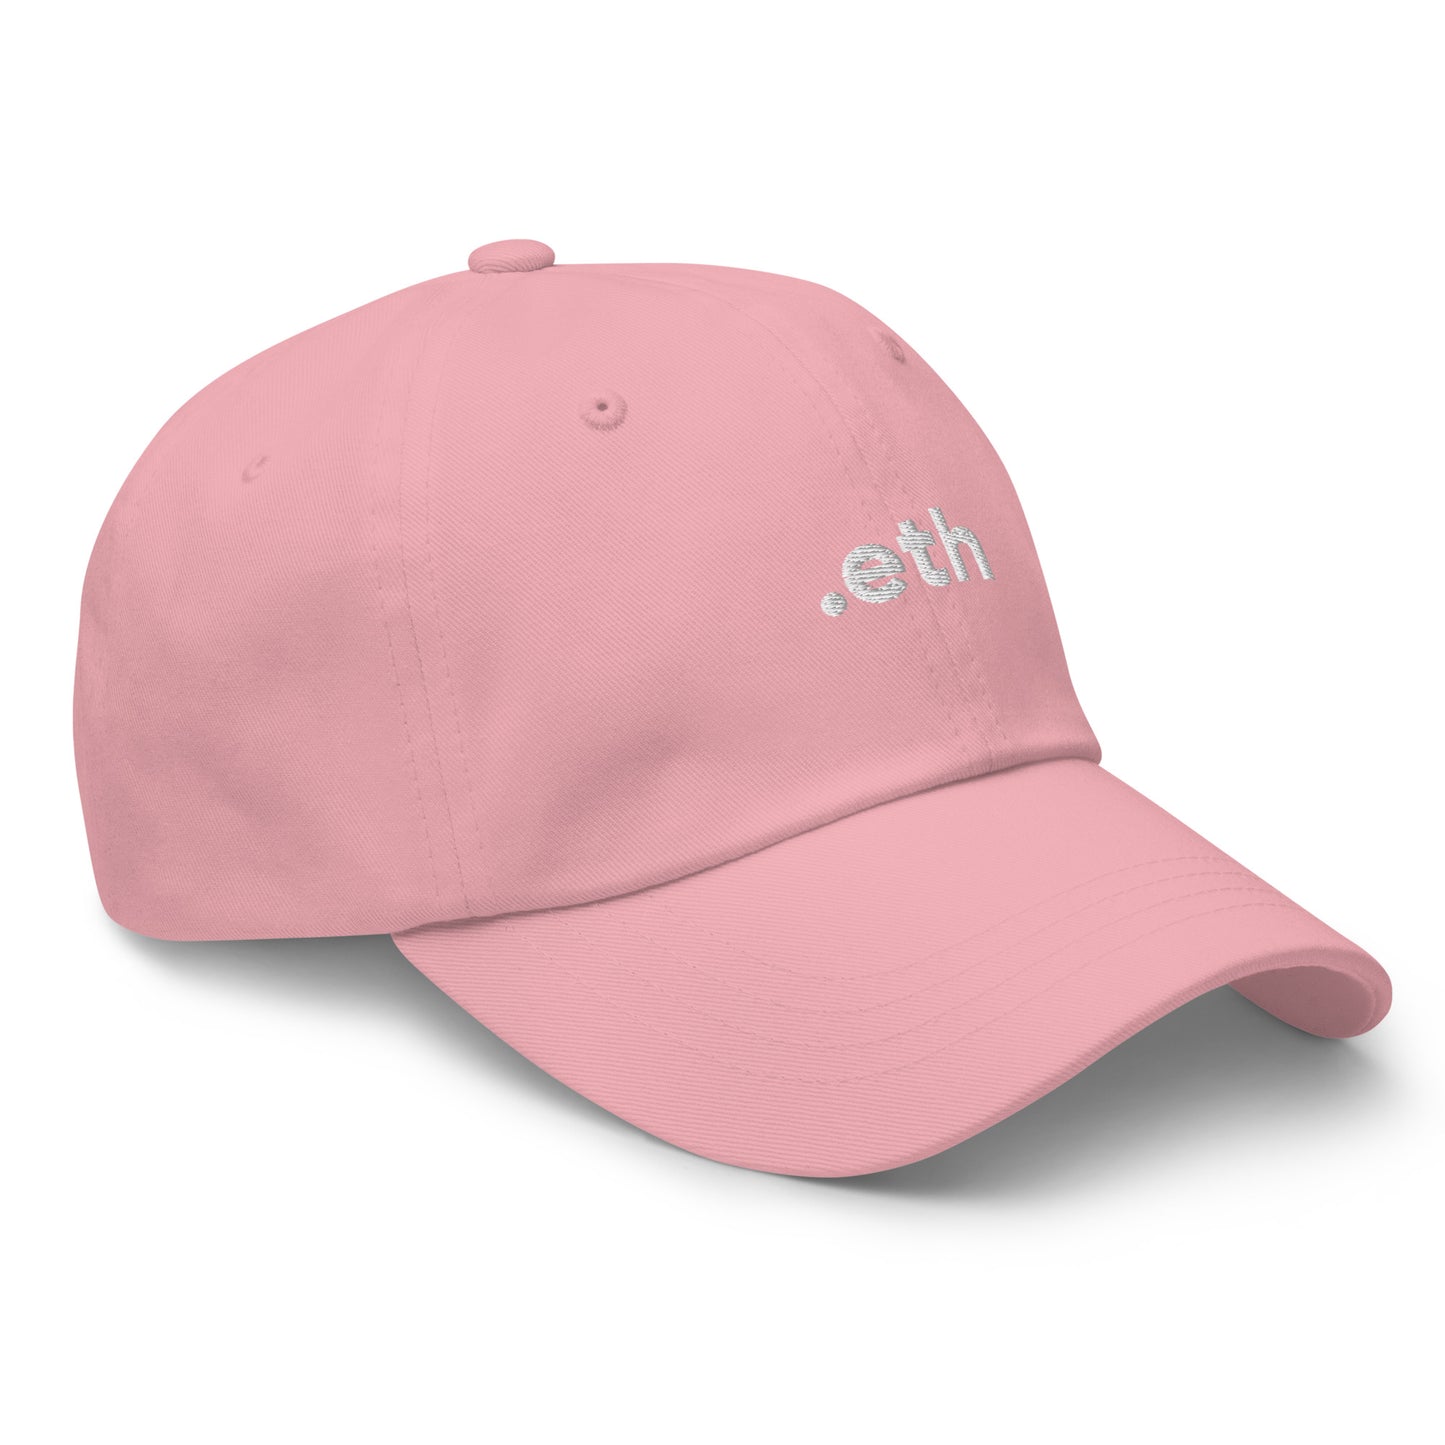 .eth Dad Hat